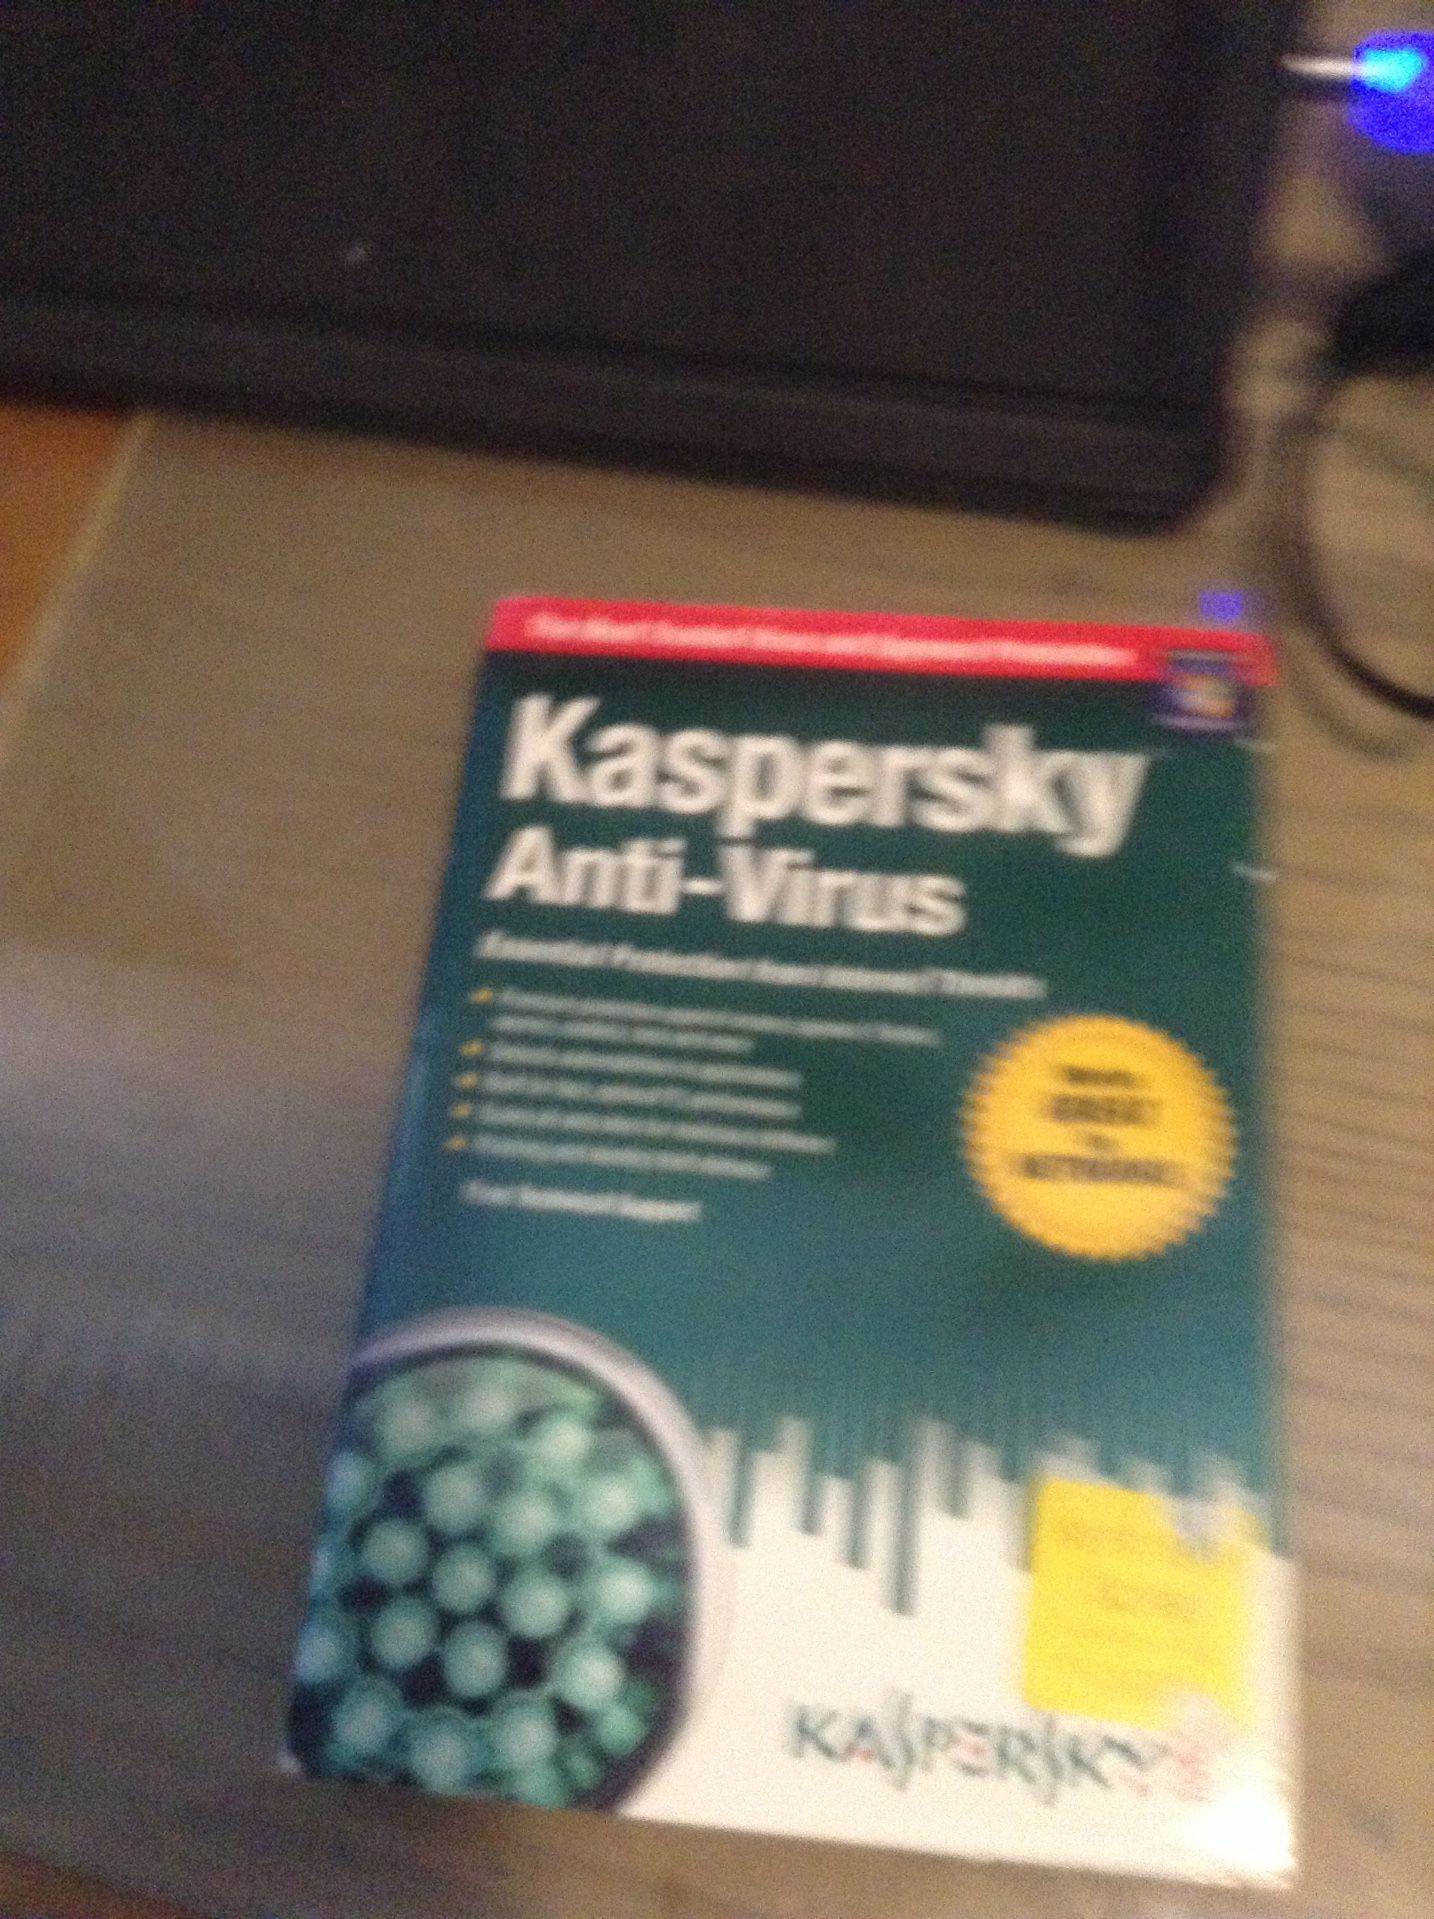 Kaspesky antivirus